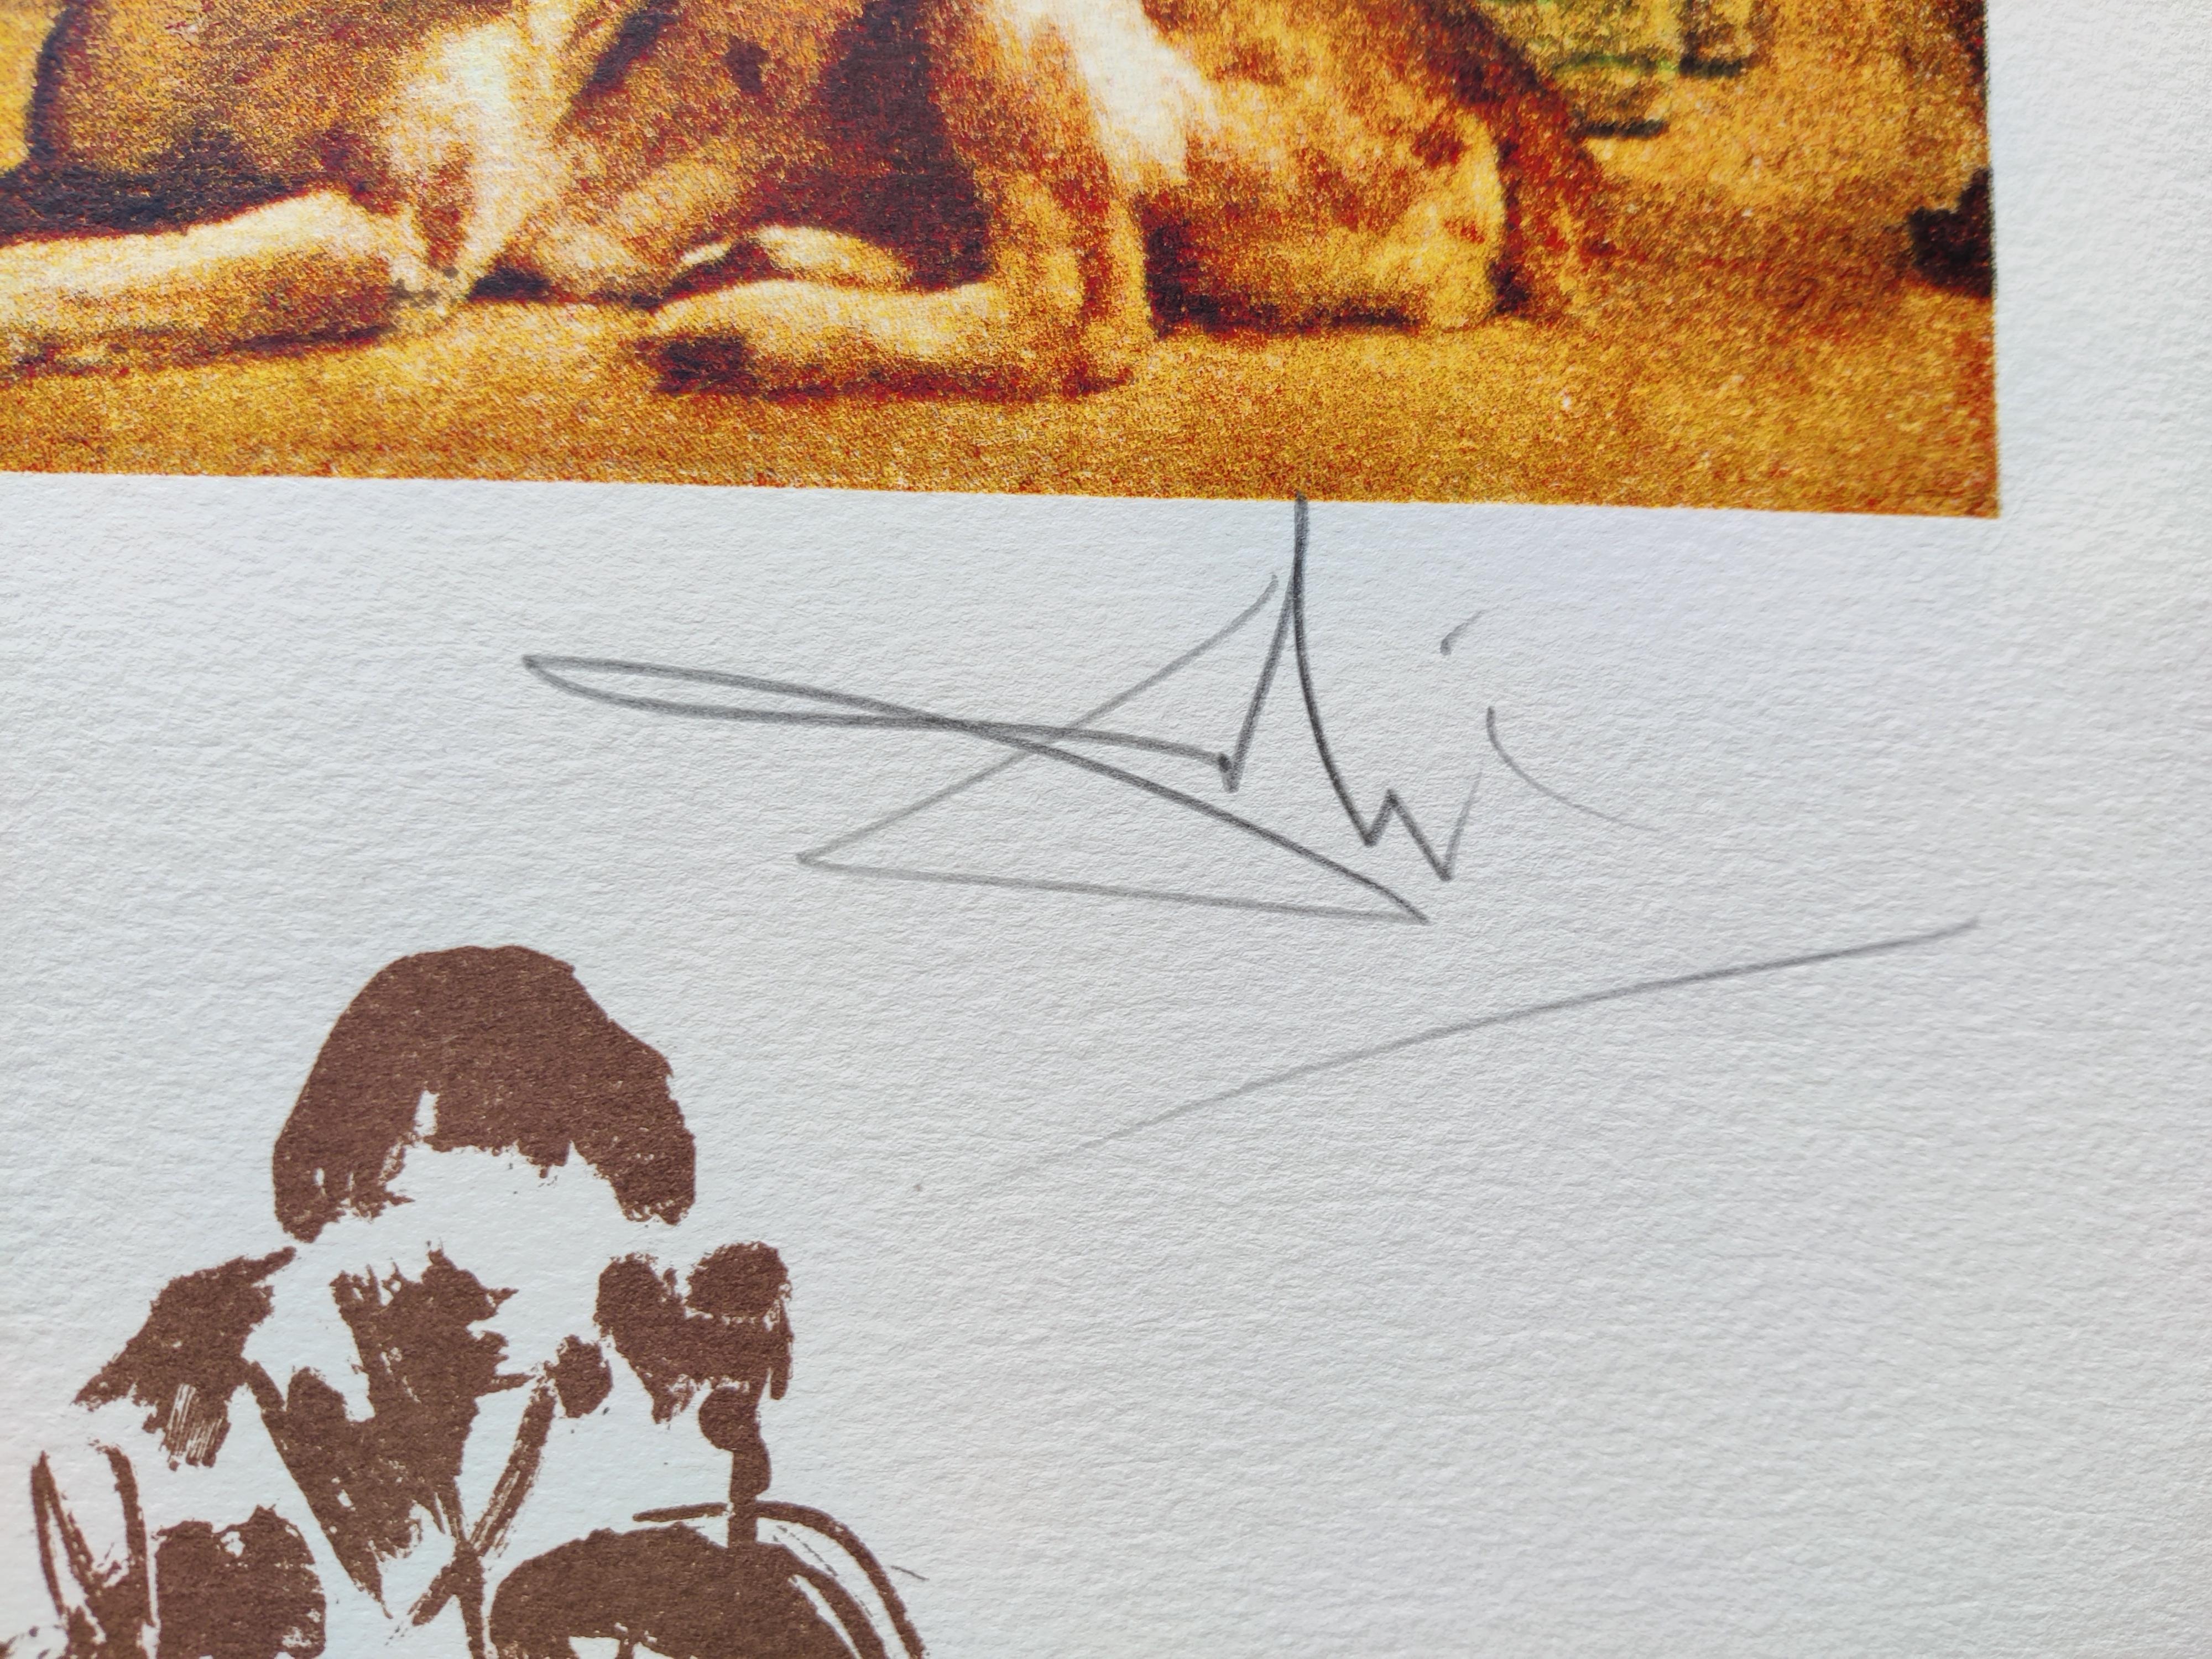 Salvador Dali
Velasquez, Les Ménines, 1974
Original-Lithographie, 1974
Bildgröße: 57,5 x 38,5 cm
Blattgröße: 89 x 56 cm
Handsigniert unten rechts
Nummeriert unten links 100 / 350.
Referenz: Albert Field, 